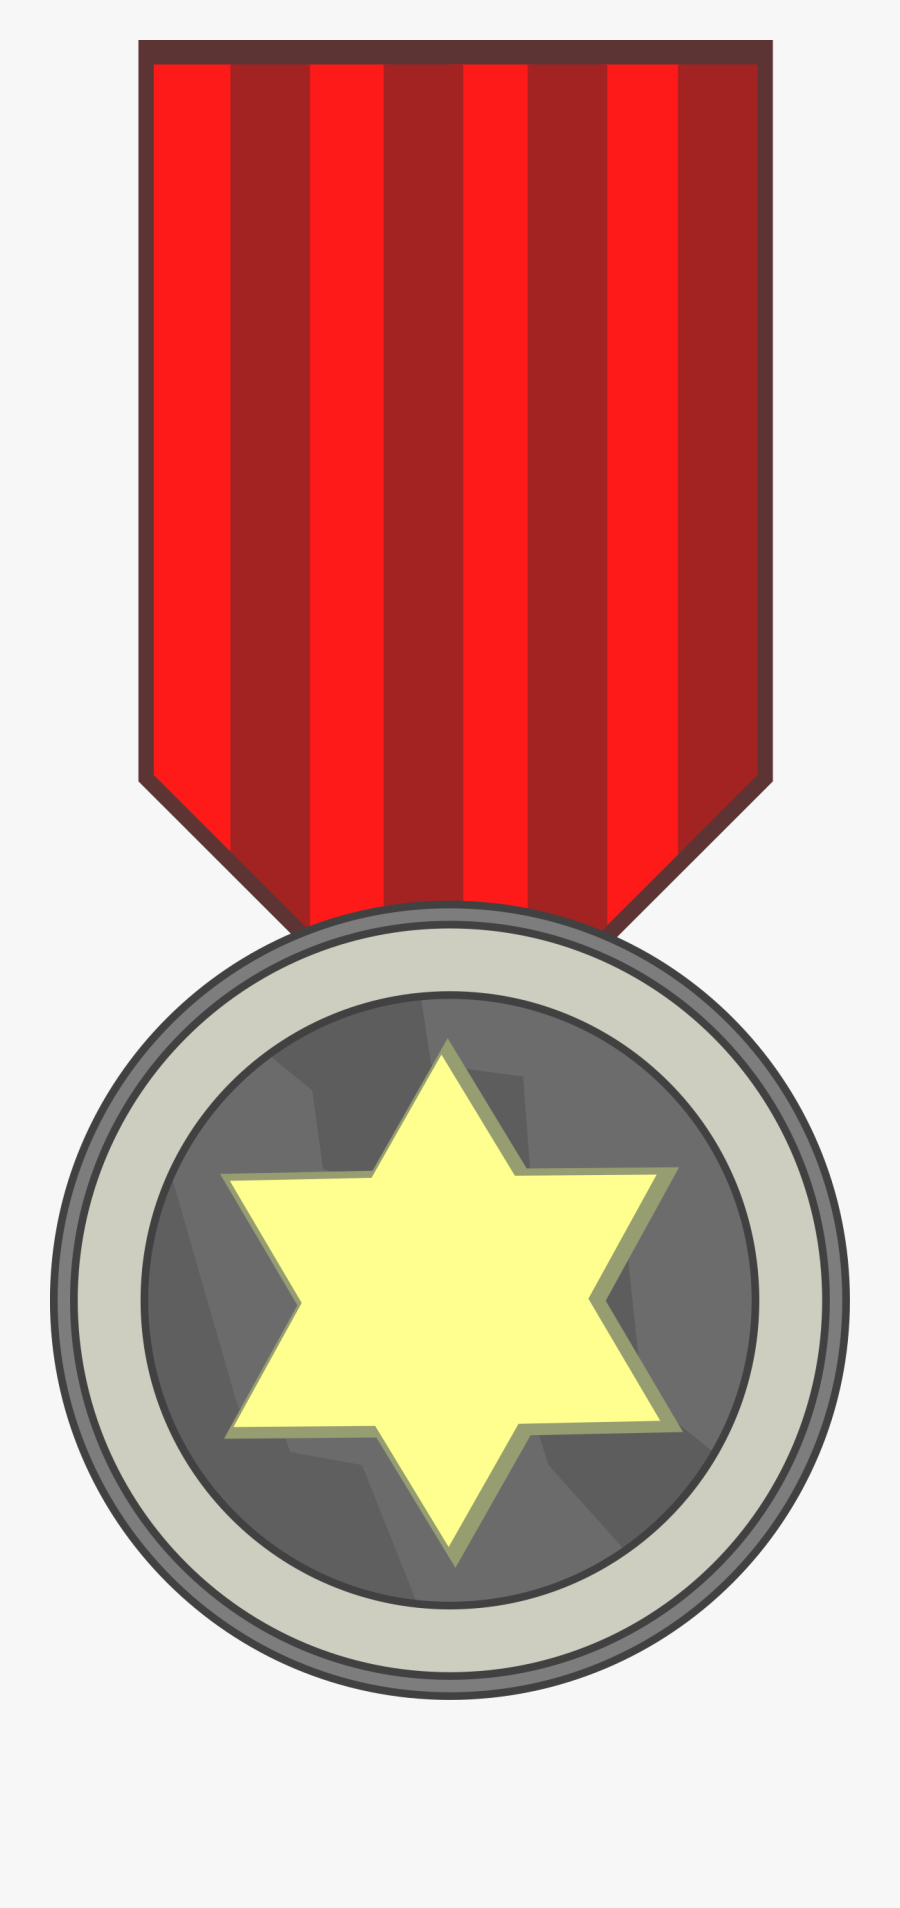 Star Award Medal - Star Medal Clipart, Transparent Clipart